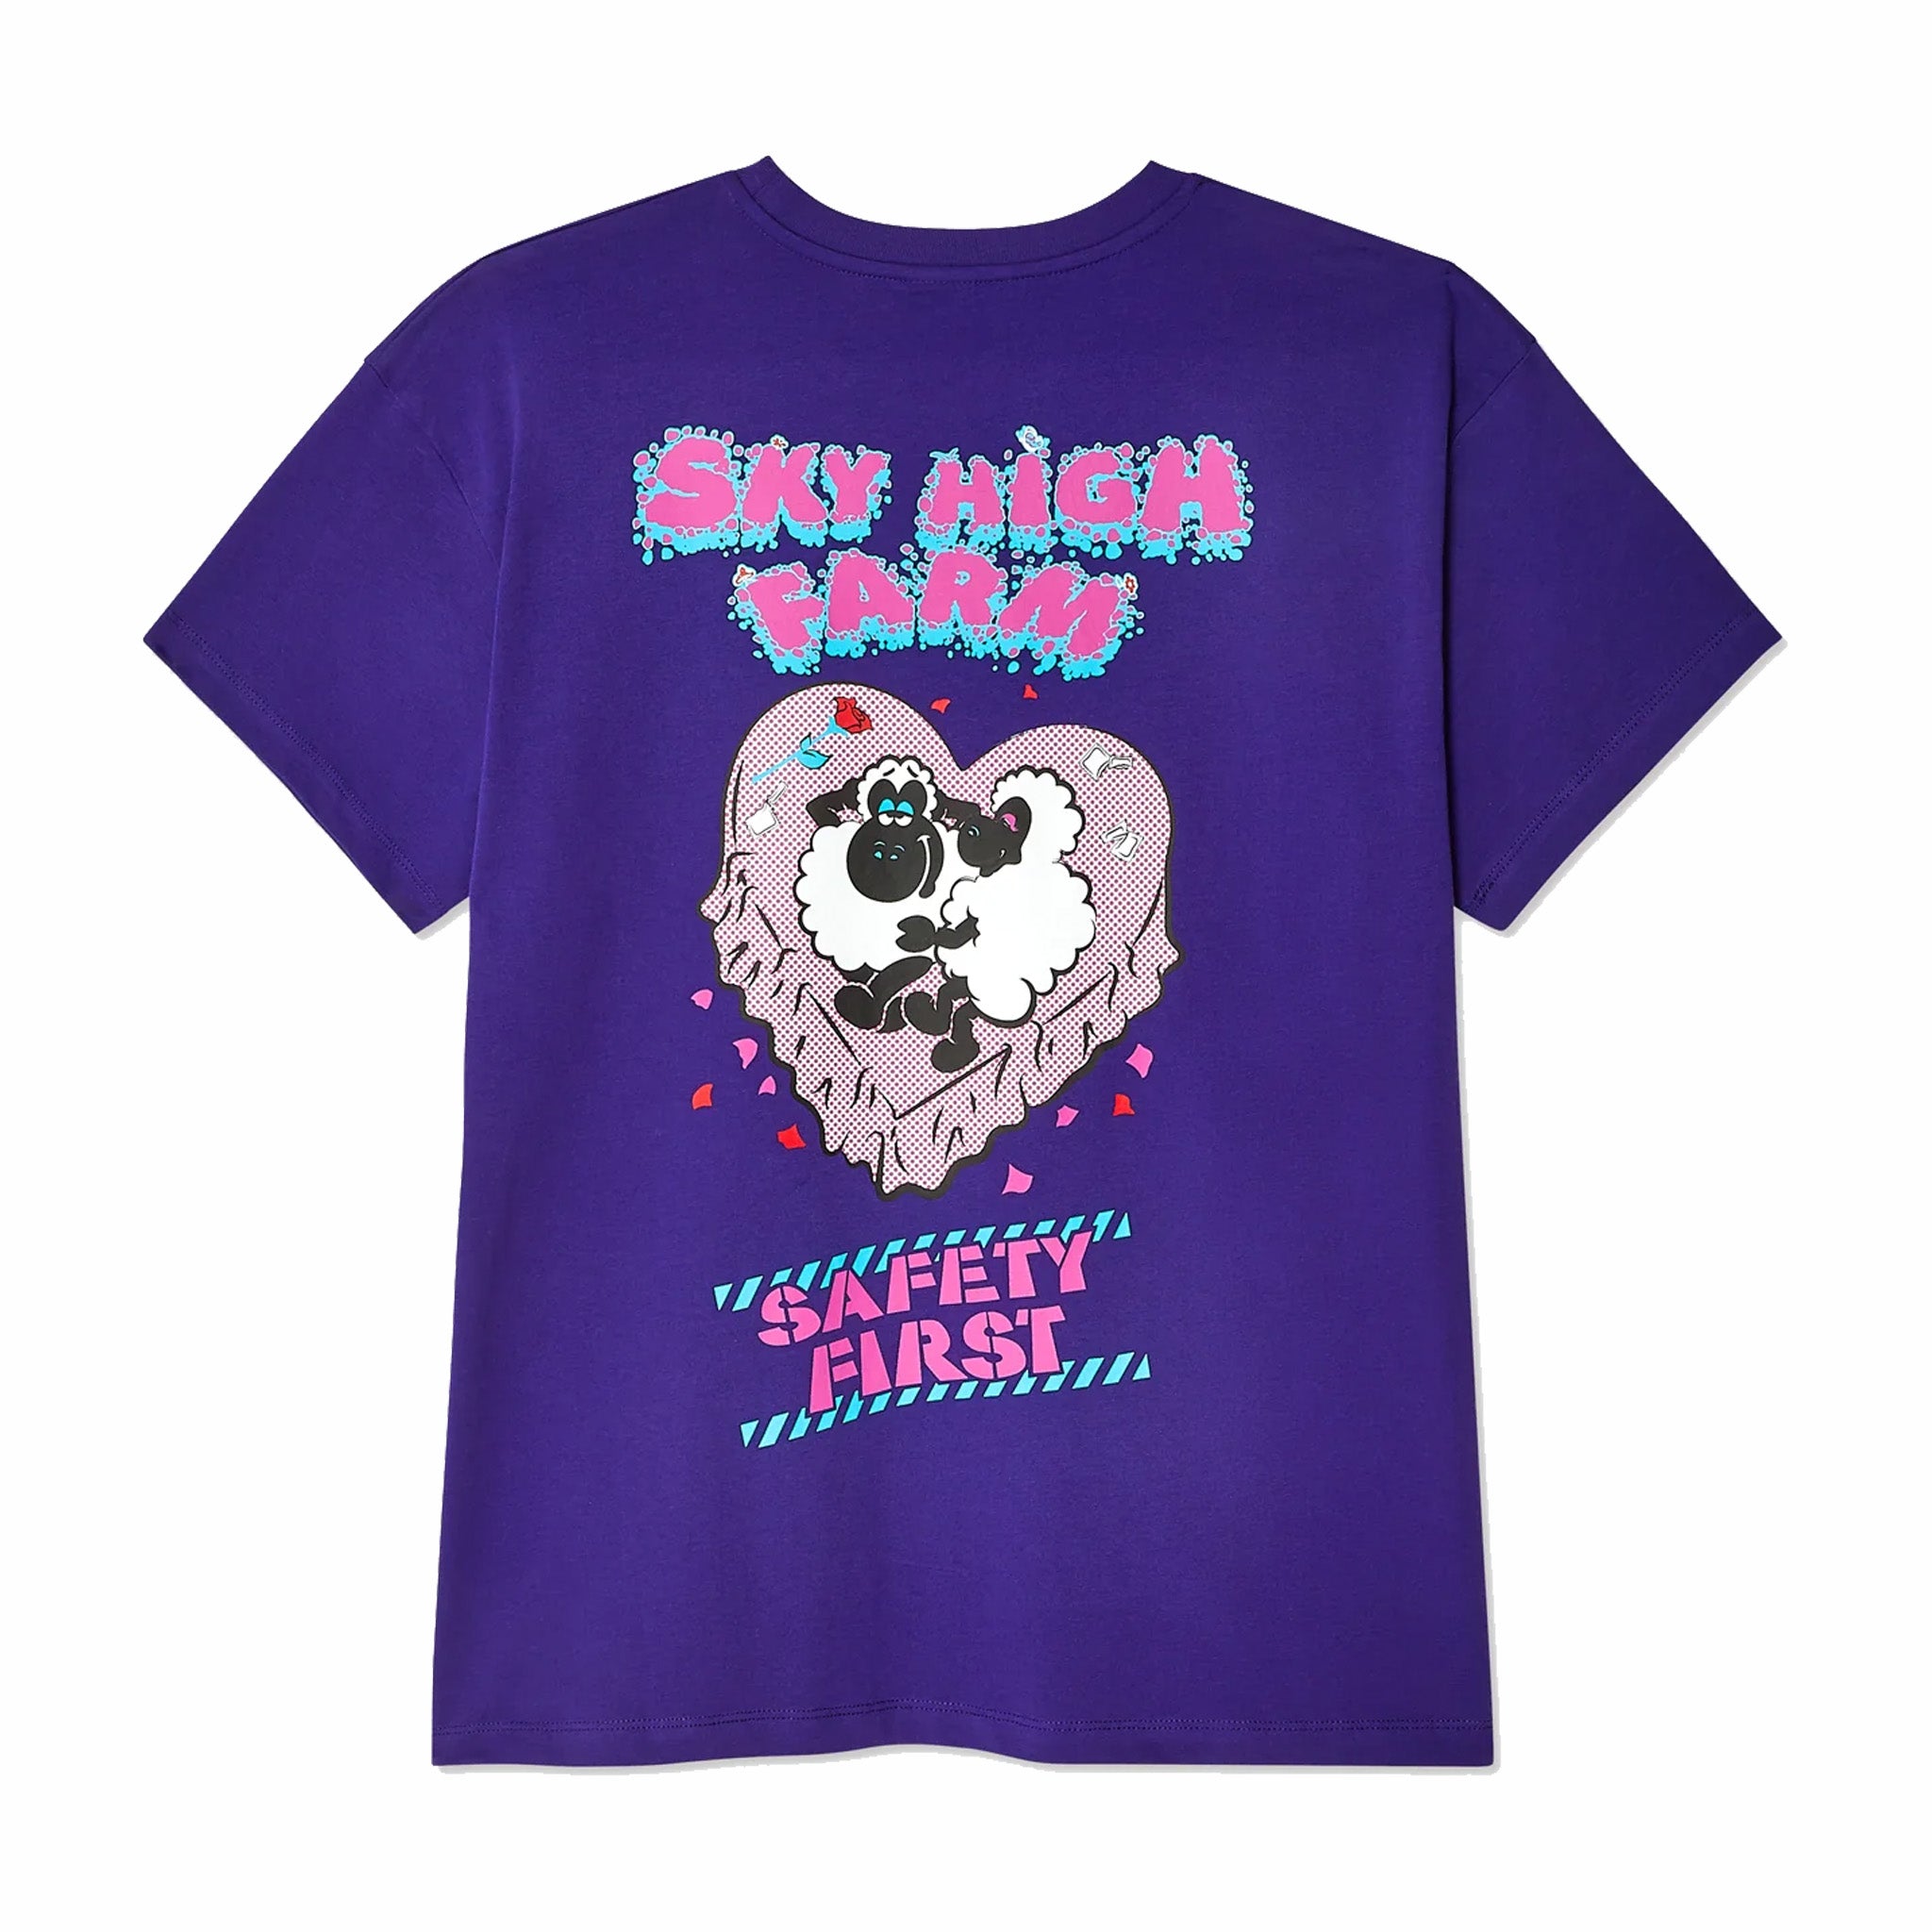 Sky High Farm Workwear Safety First T-Shirt (Purple) - August Shop